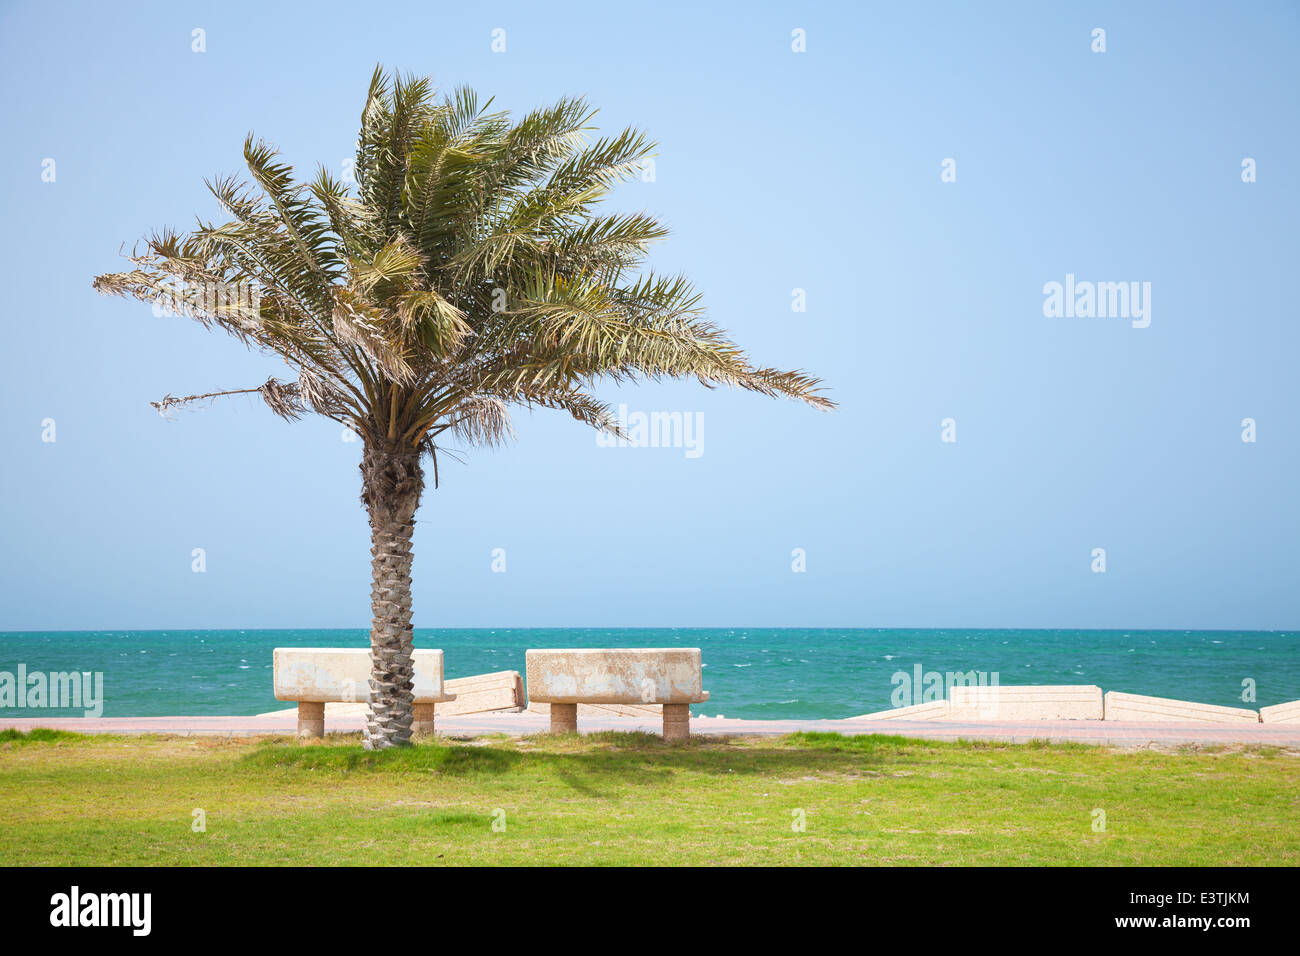 Date Tree en la costa del Golfo Pérsico, Arabia Saudita Foto de stock